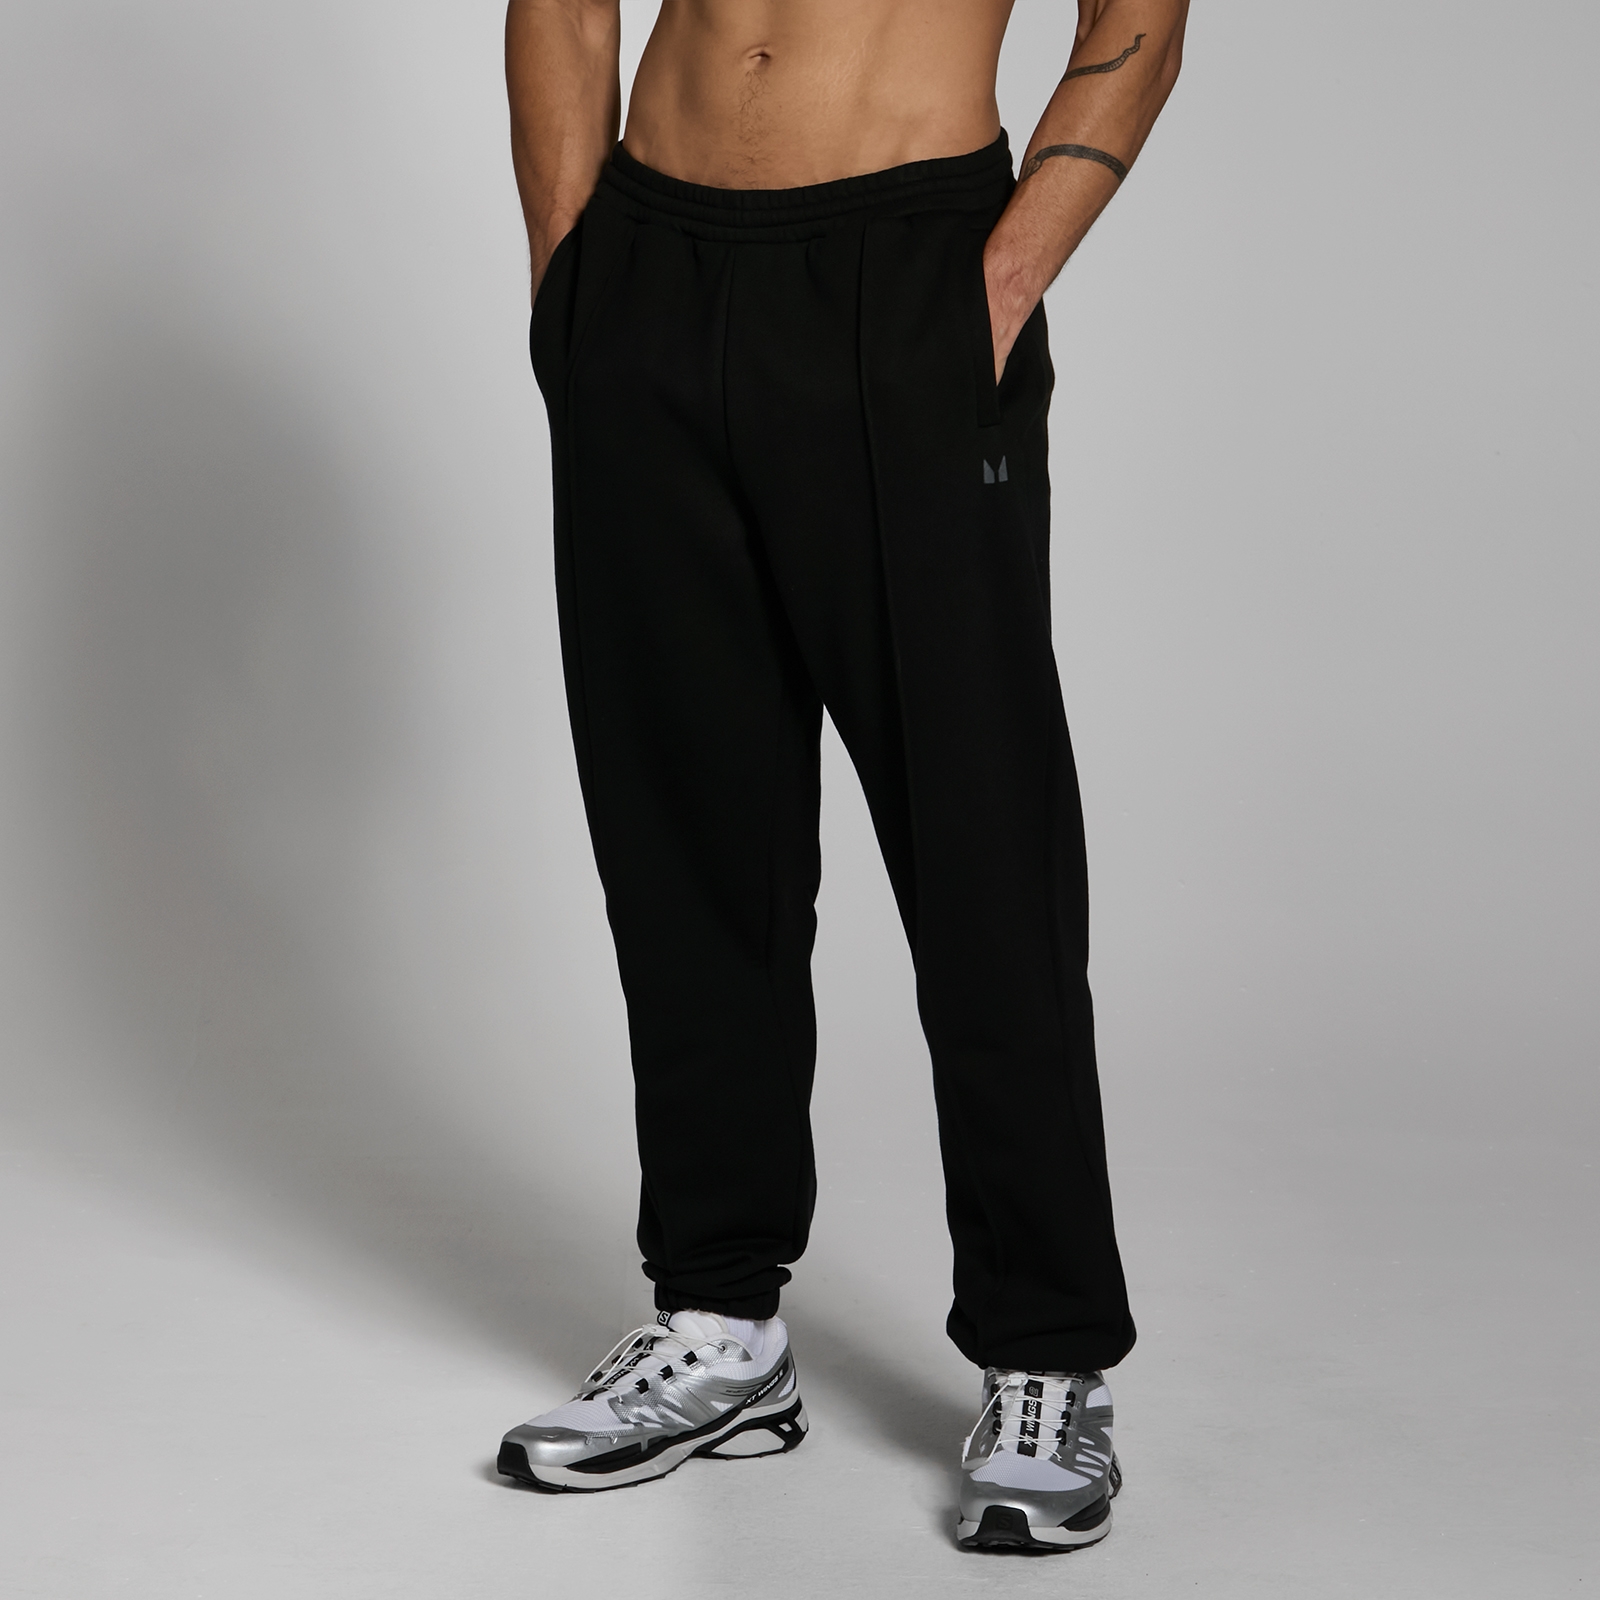 Image of Pantaloni da jogging pesanti oversize MP Lifestyle da uomo - Neri - XL